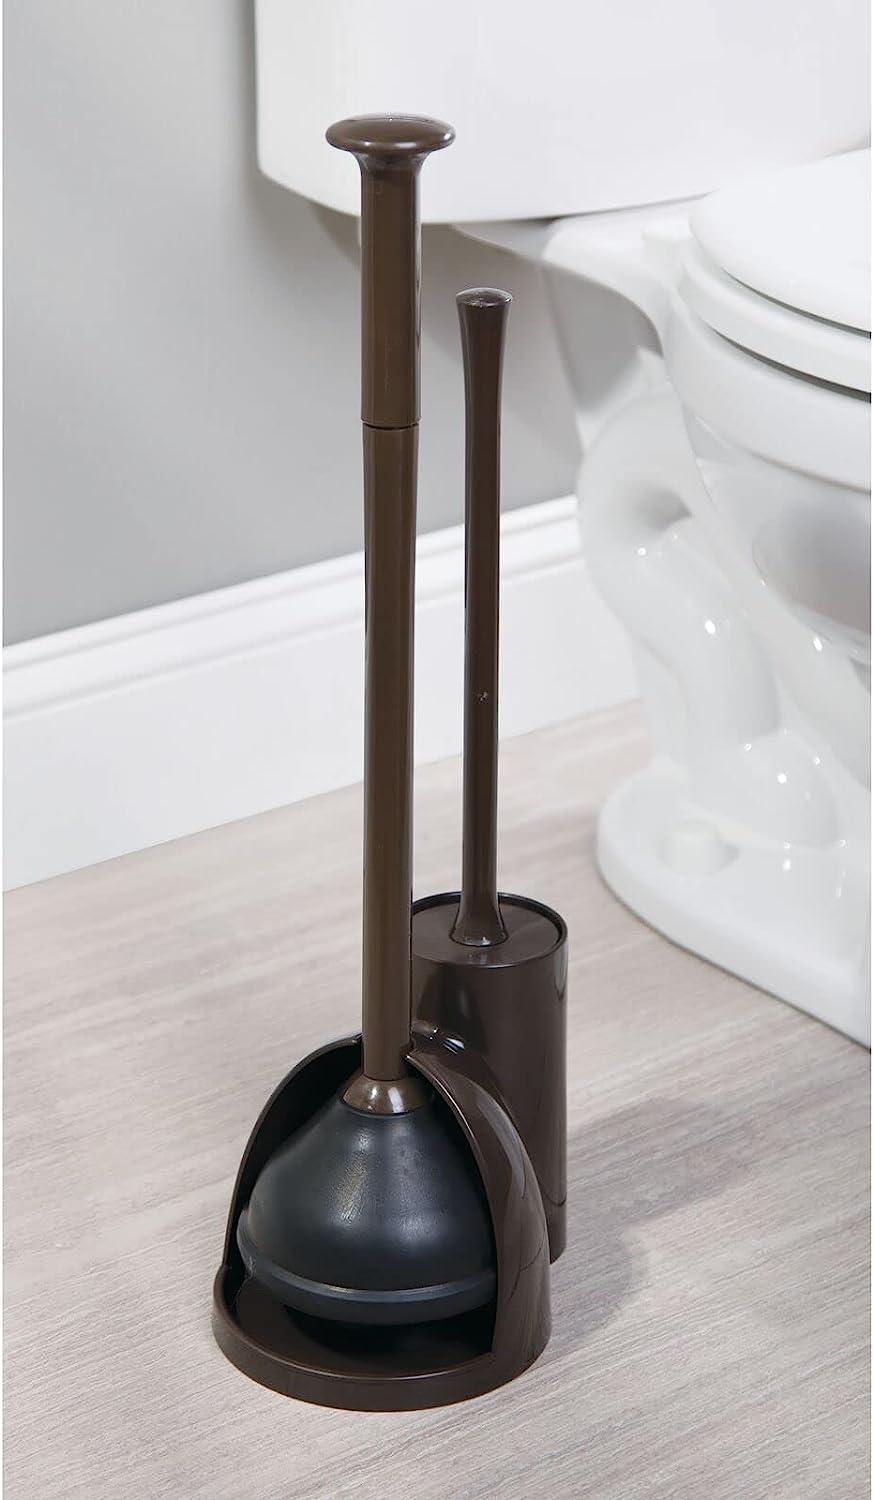 Toilet Plunger Bowl Brush Combo: Hideaway Elegant Toilet Scrubber